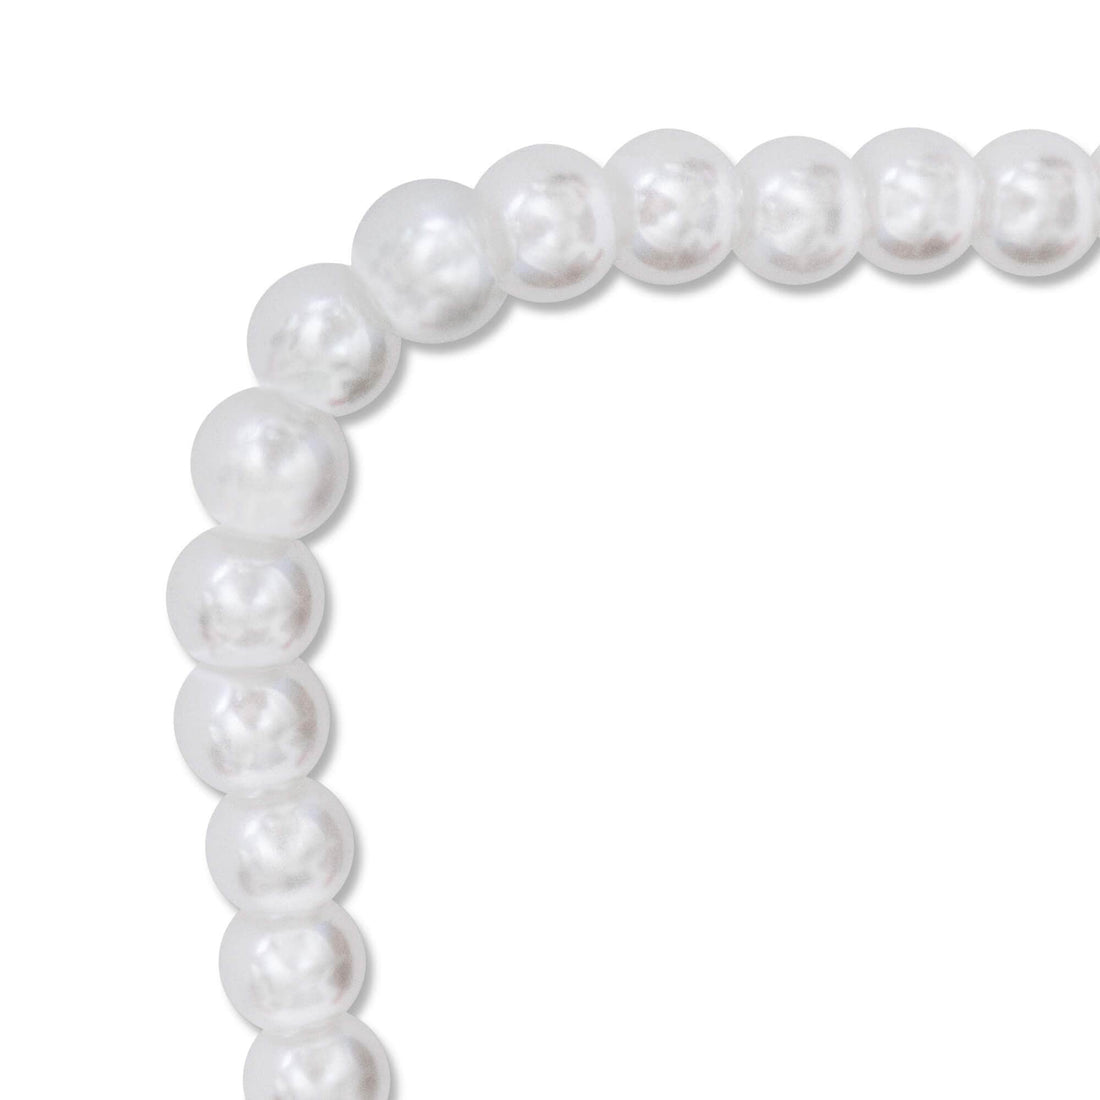 Eyewear Chain - White Pearl Glasses Chain